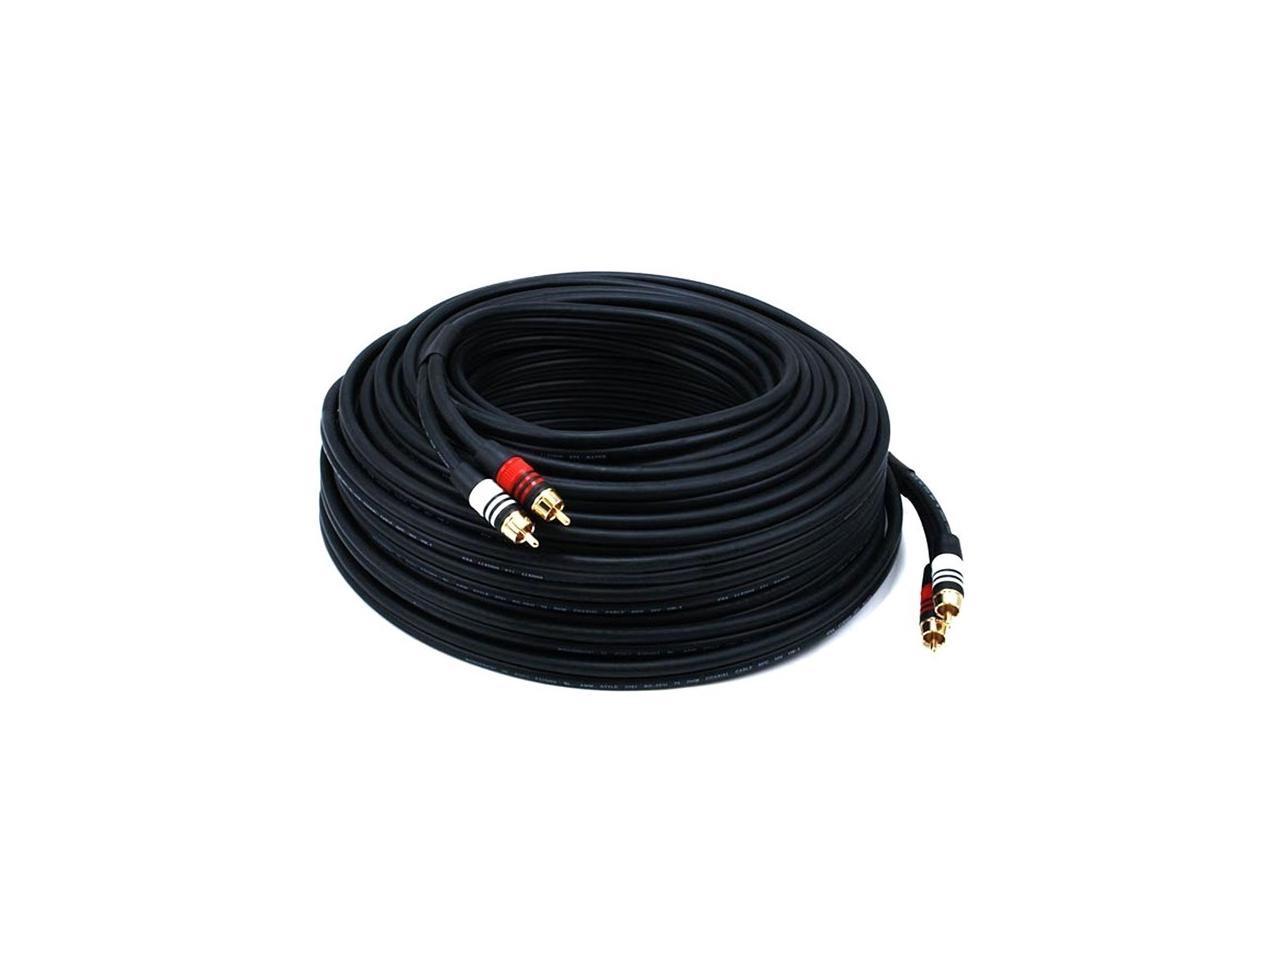 Monoprice Premium RCA Cable - 100 Feet - Black | 2 RCA Plug to 2 RCA Plug, Male to Male, 22AWG - image 5 of 5